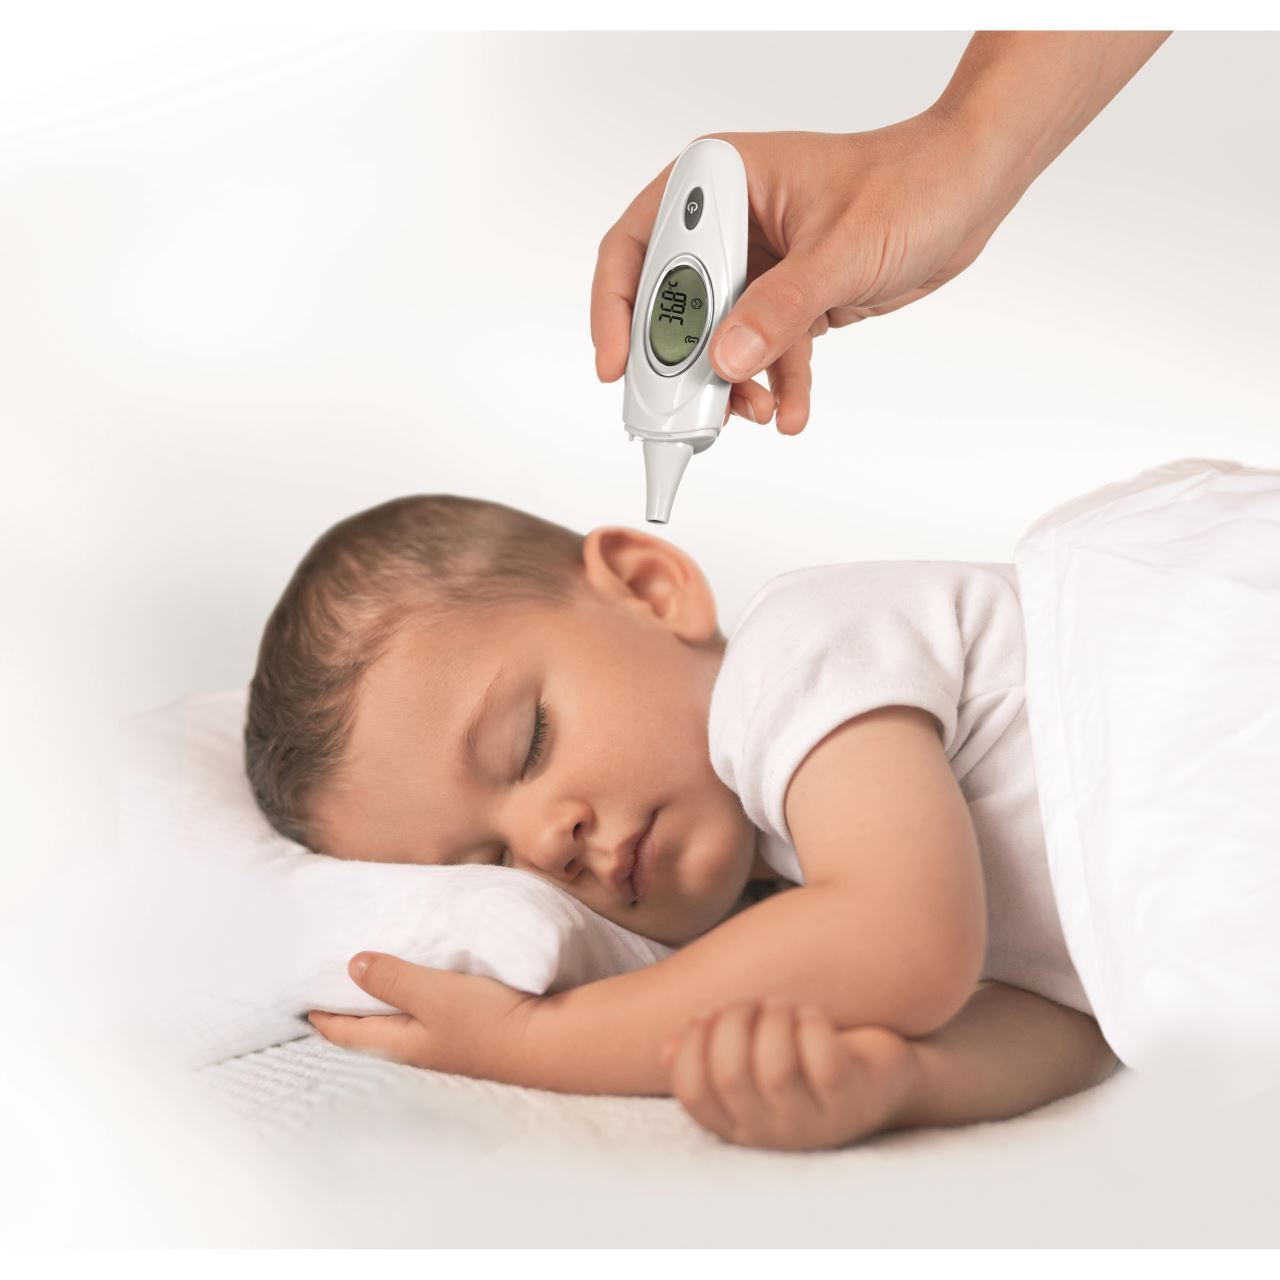 Termometru cu infrarosii pentru tampla si ureche SkinTemp REER 98020 Children SafetyCare